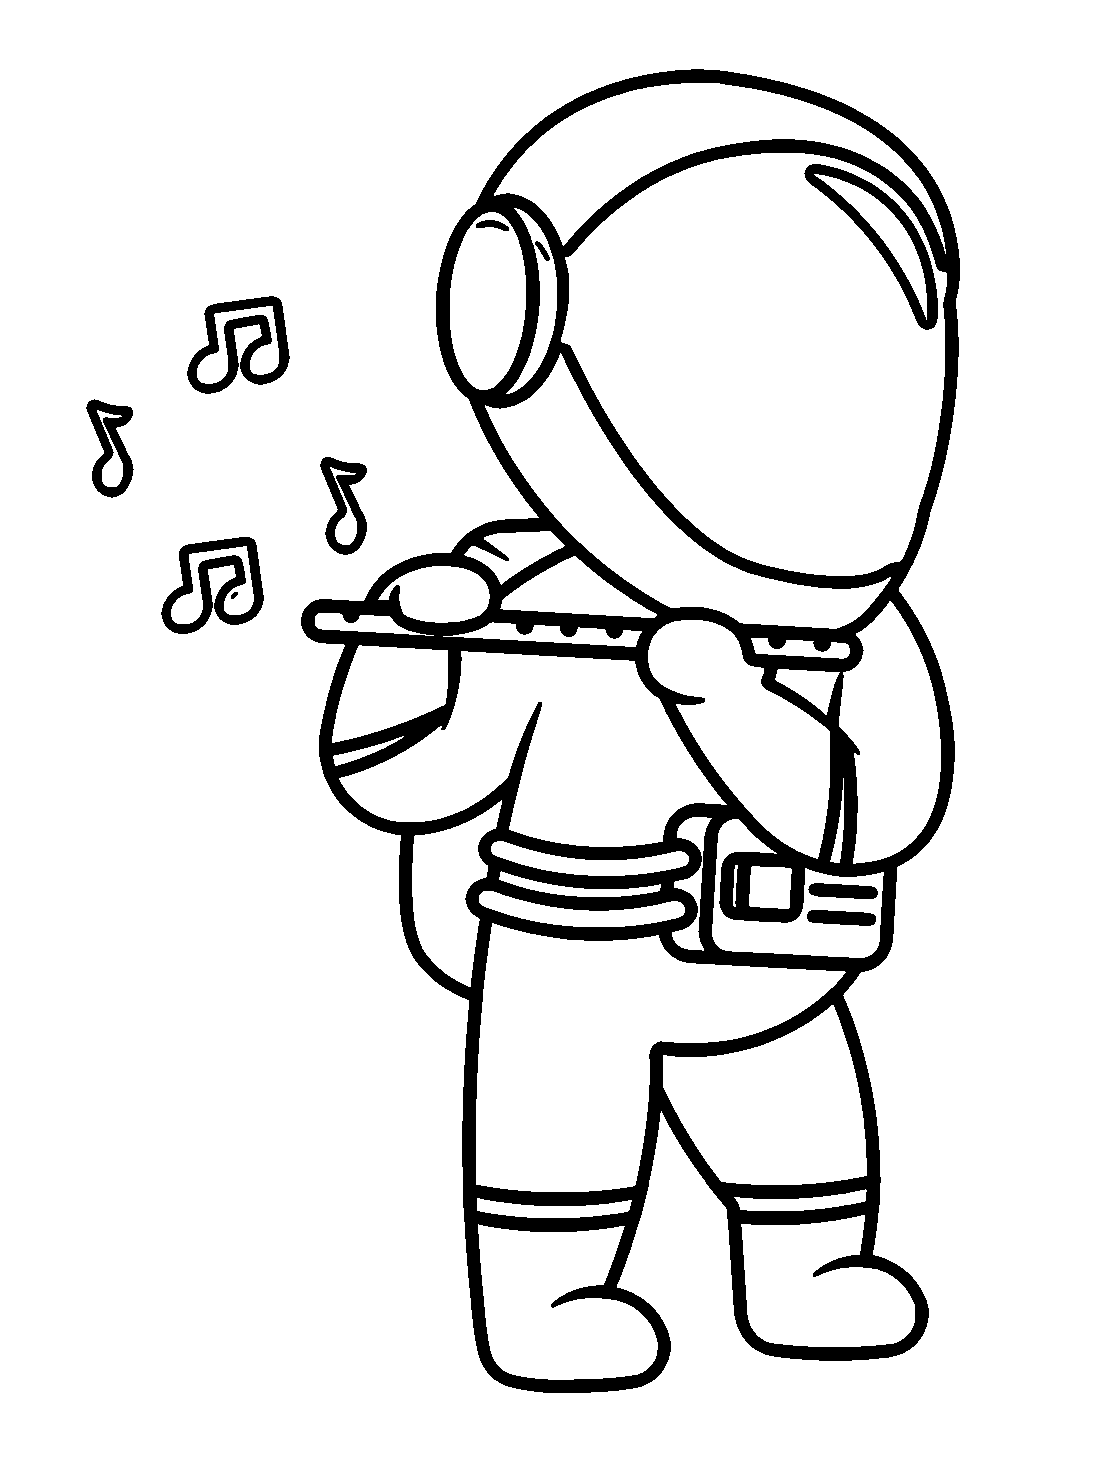 Cute astronaut playing flute music cartoon